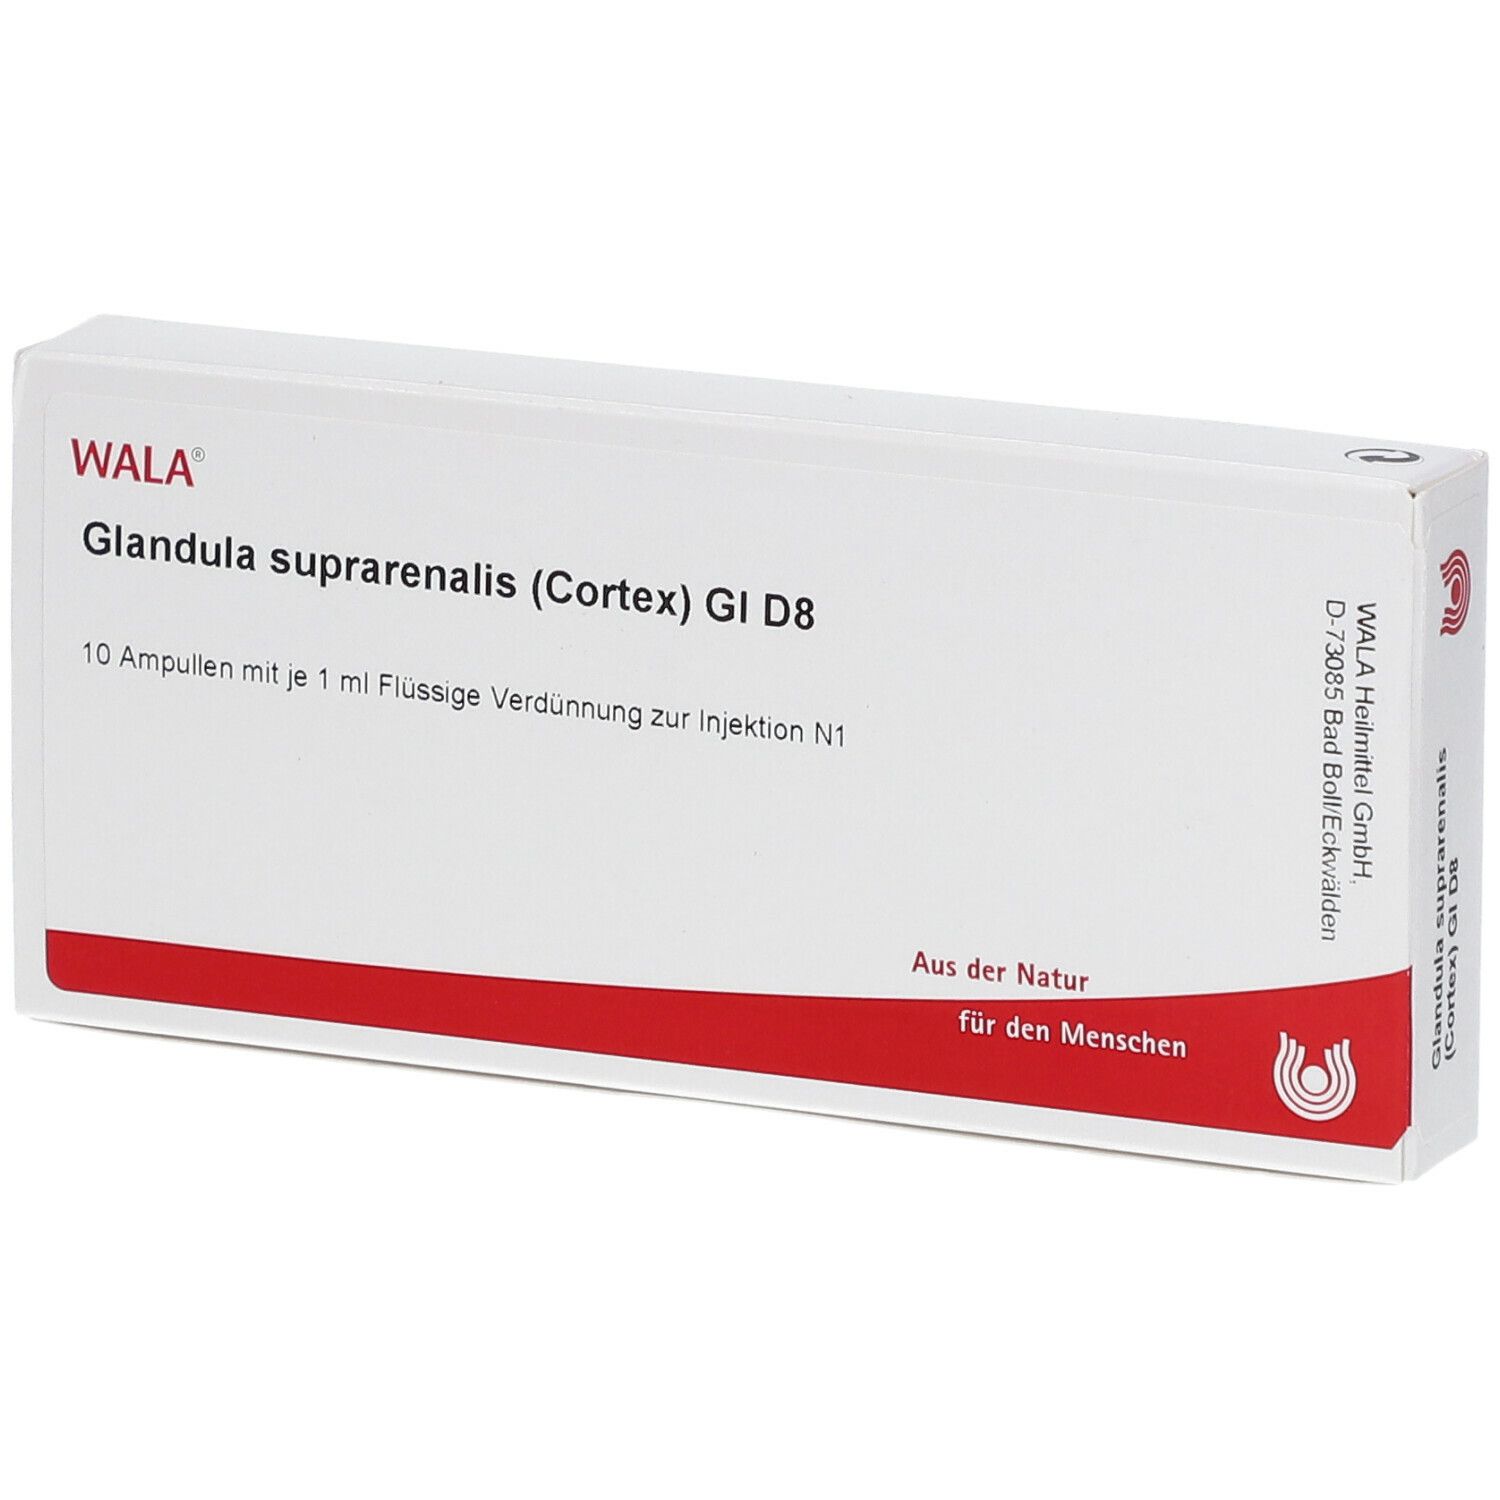 Wala® Glandula suprarenalis Cortex Gl D 8